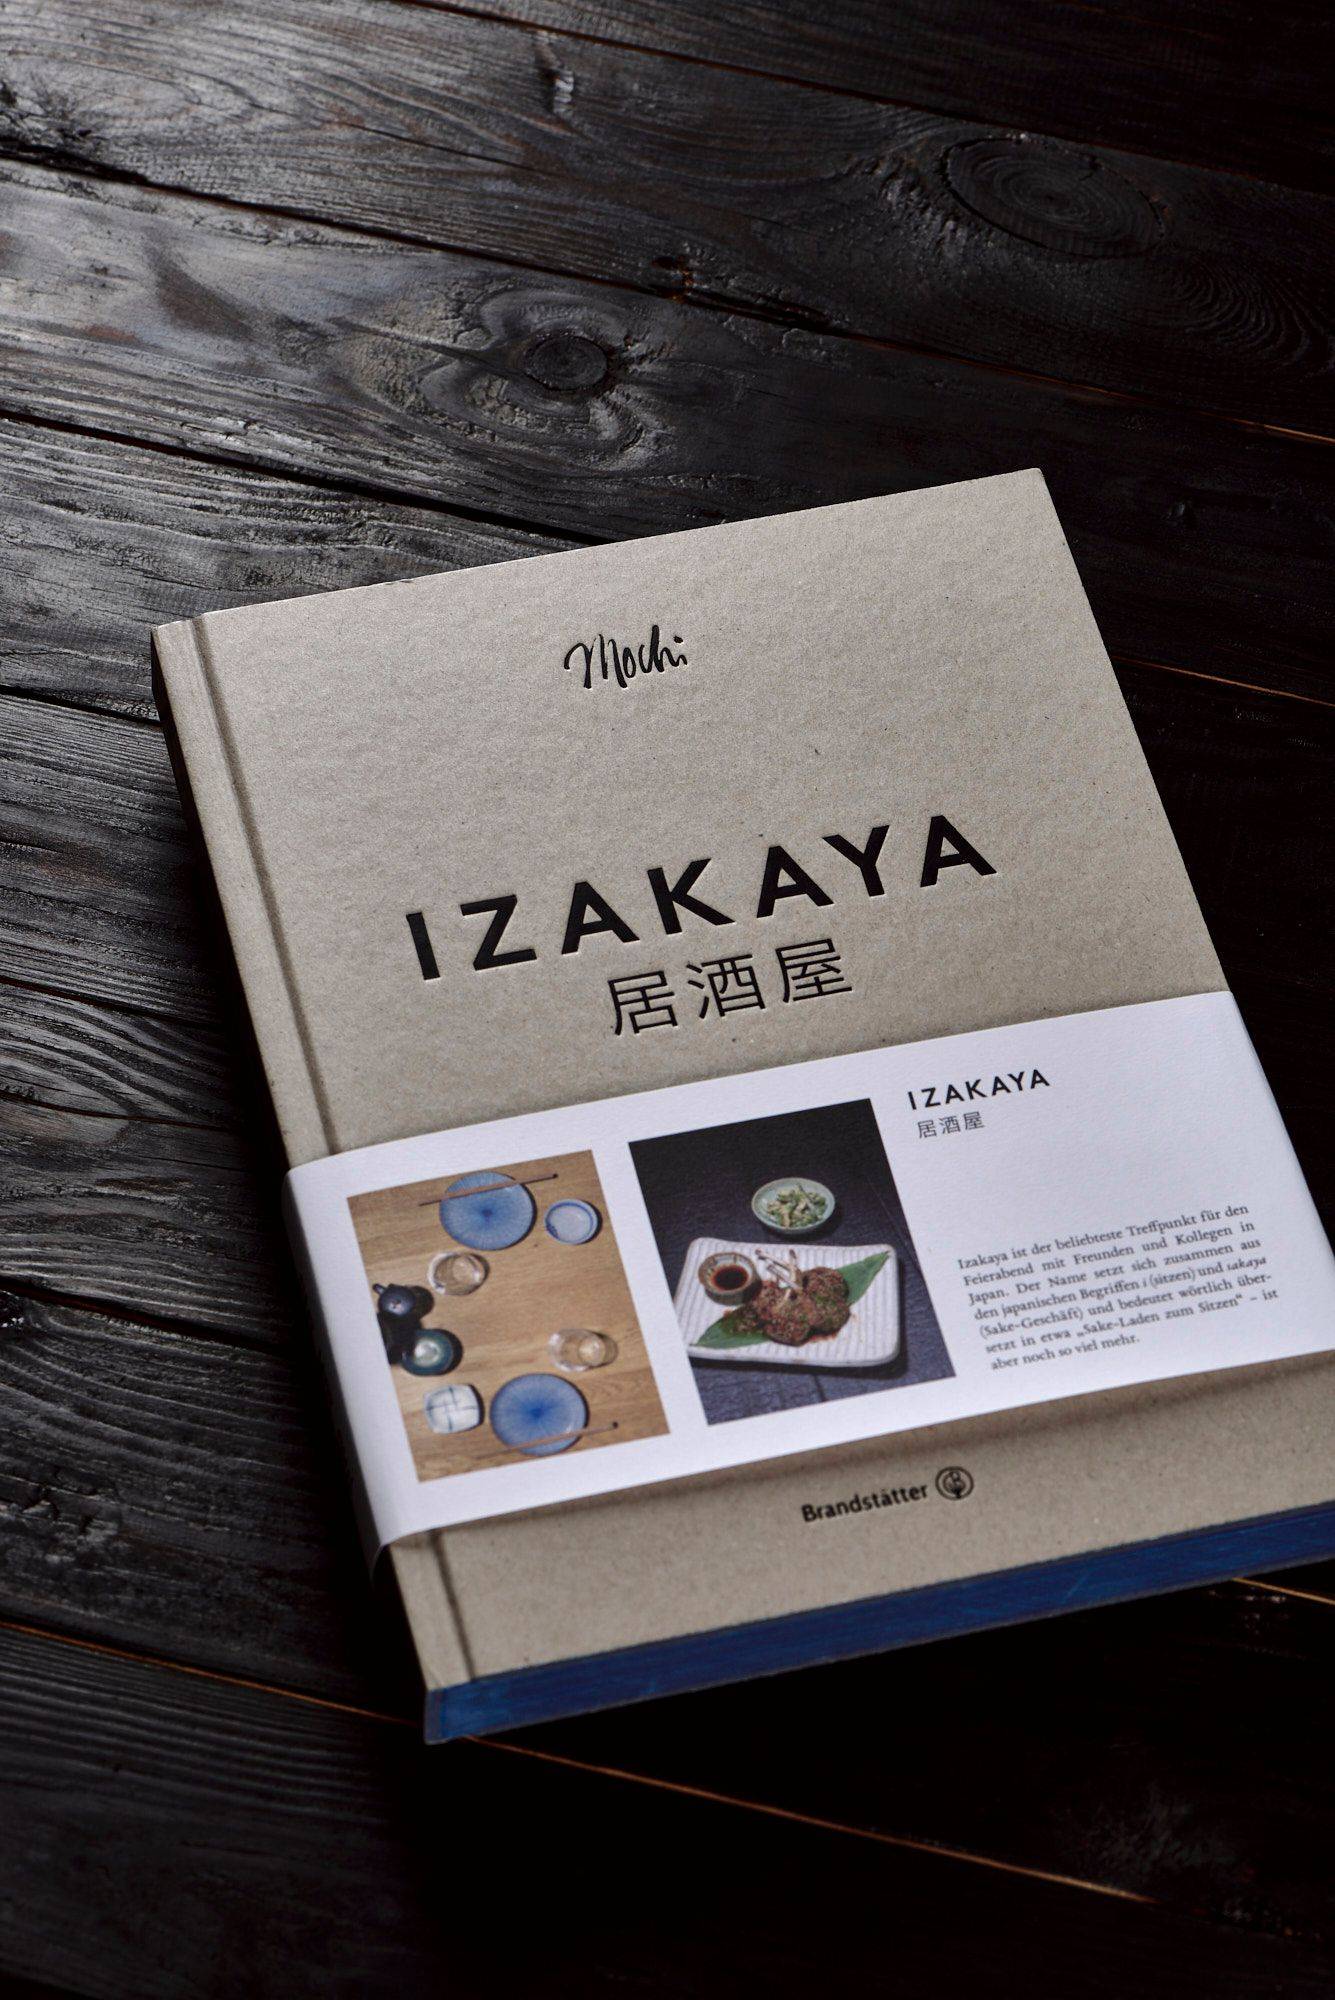 izakaya cookbook with black wooden background